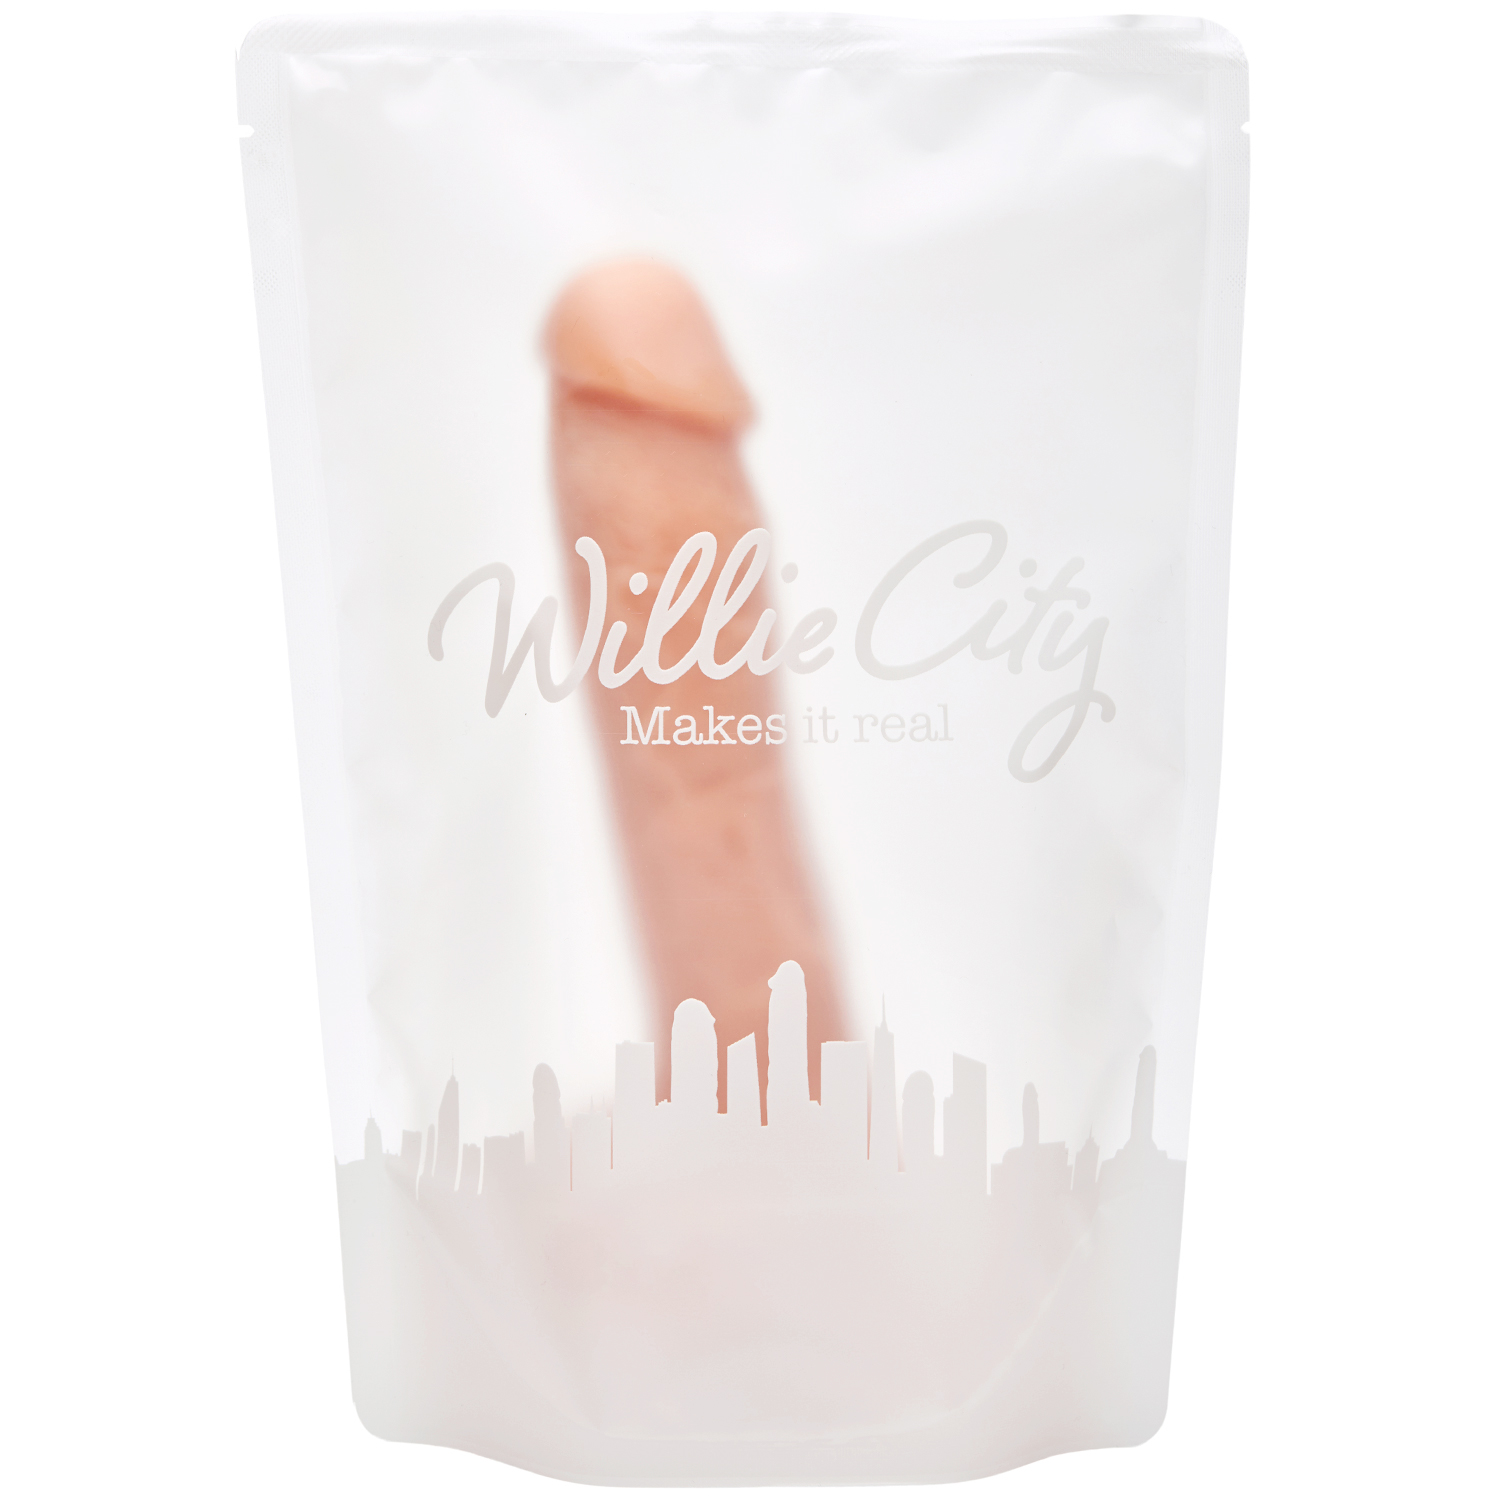 Willie City Willie City Luxe Realistisk Silikondildo 20 cm - Beige